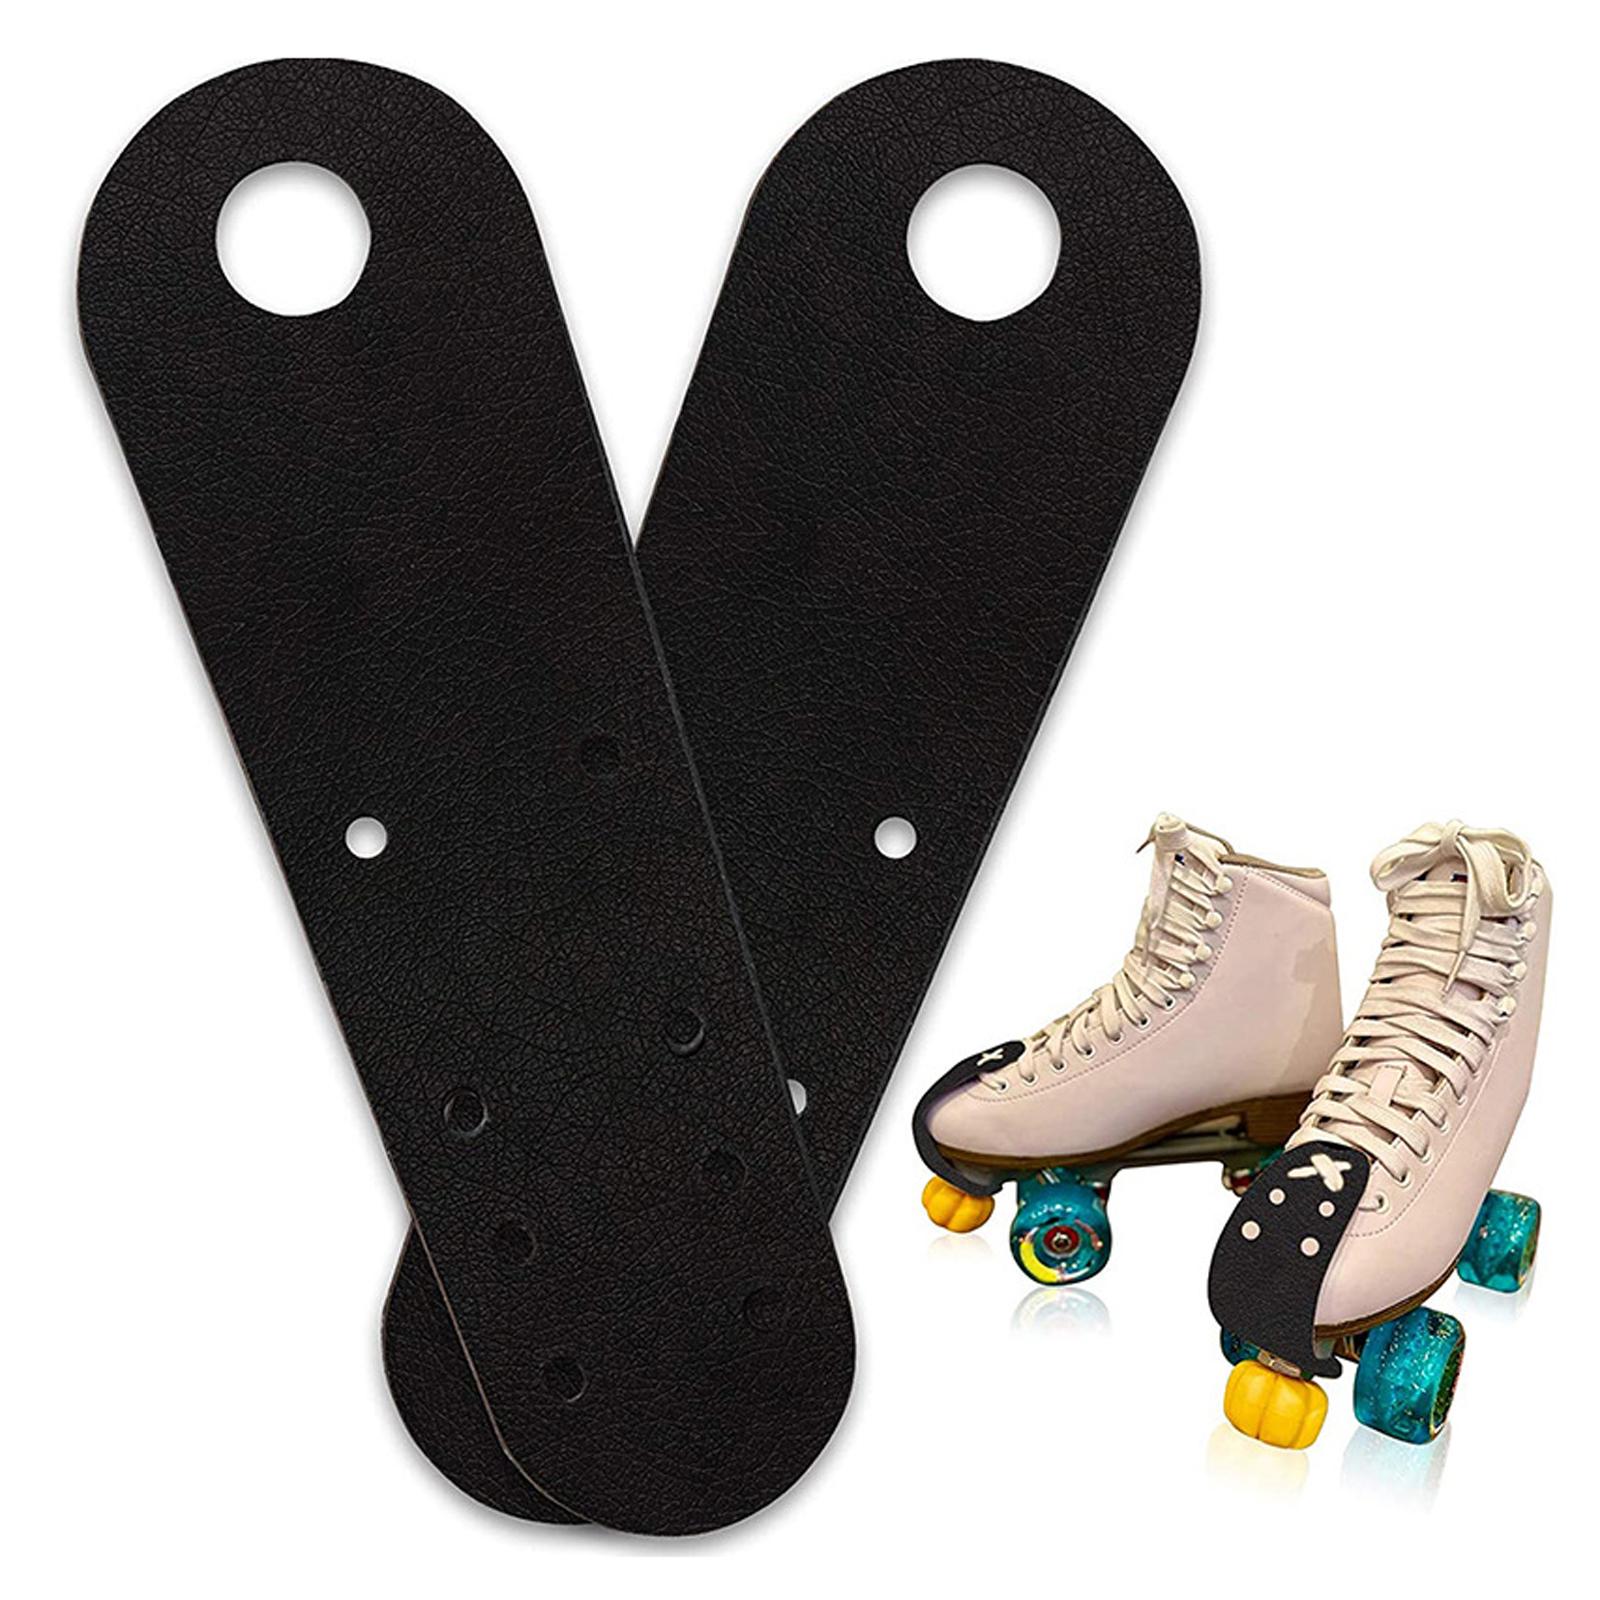 Roller Skate Toe Protector Durable Removable for Rollerblading Skating Accs Black